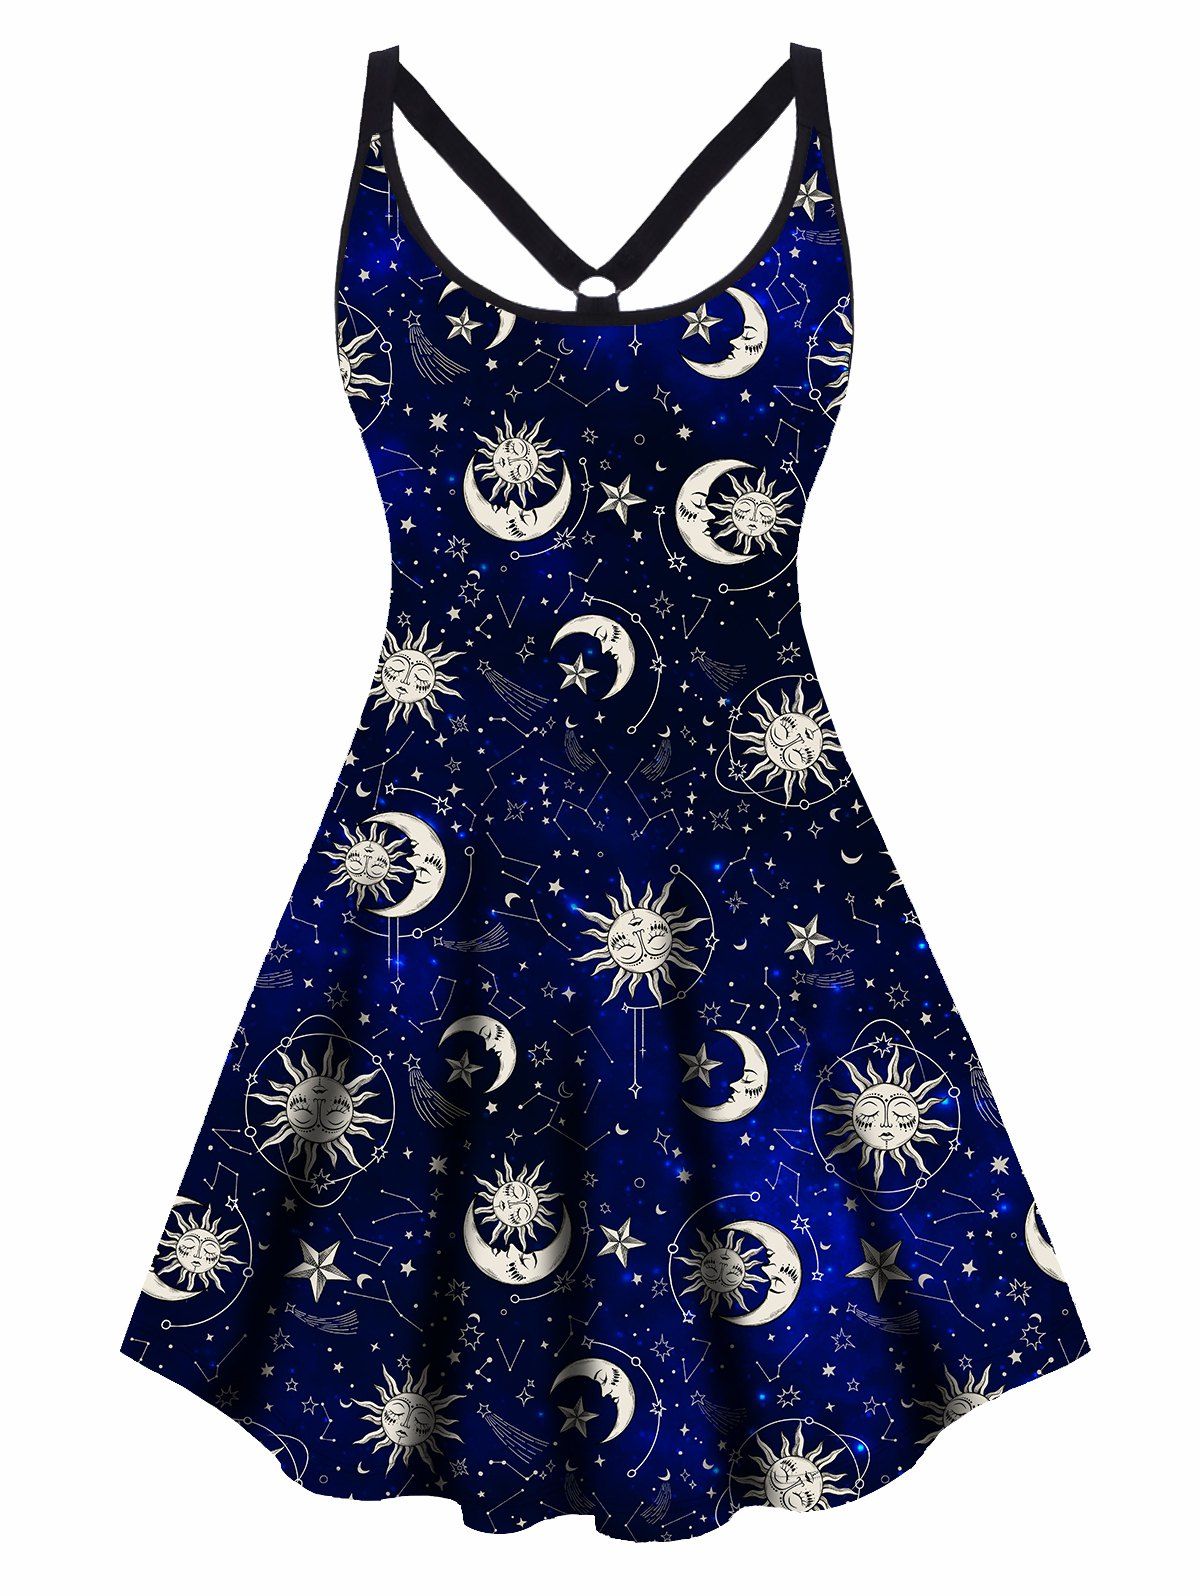 Plus Size Dress Vintage Sun Moon Print Cut Out High Waisted A Line Mini Dress - BLACK 5X